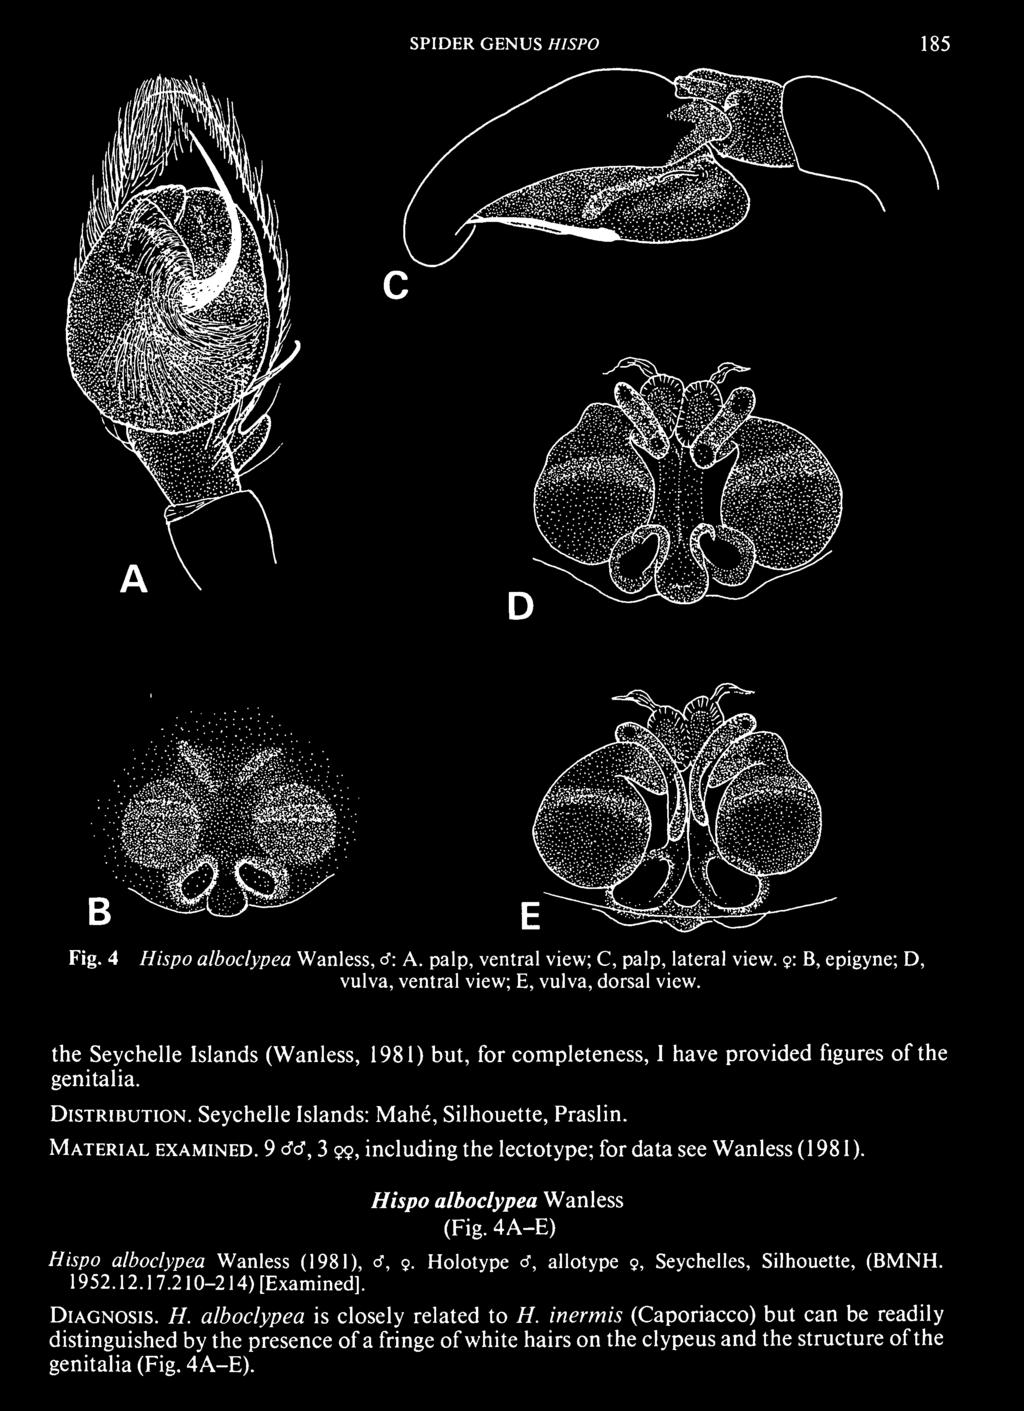 Hispo alboclypea Wanless (Fig. 4A-E) Hispo alboclypea Wanless (1981), cf, 9. Holotype cf, allotype 9, Seychelles, Silhouette, (BMNH.